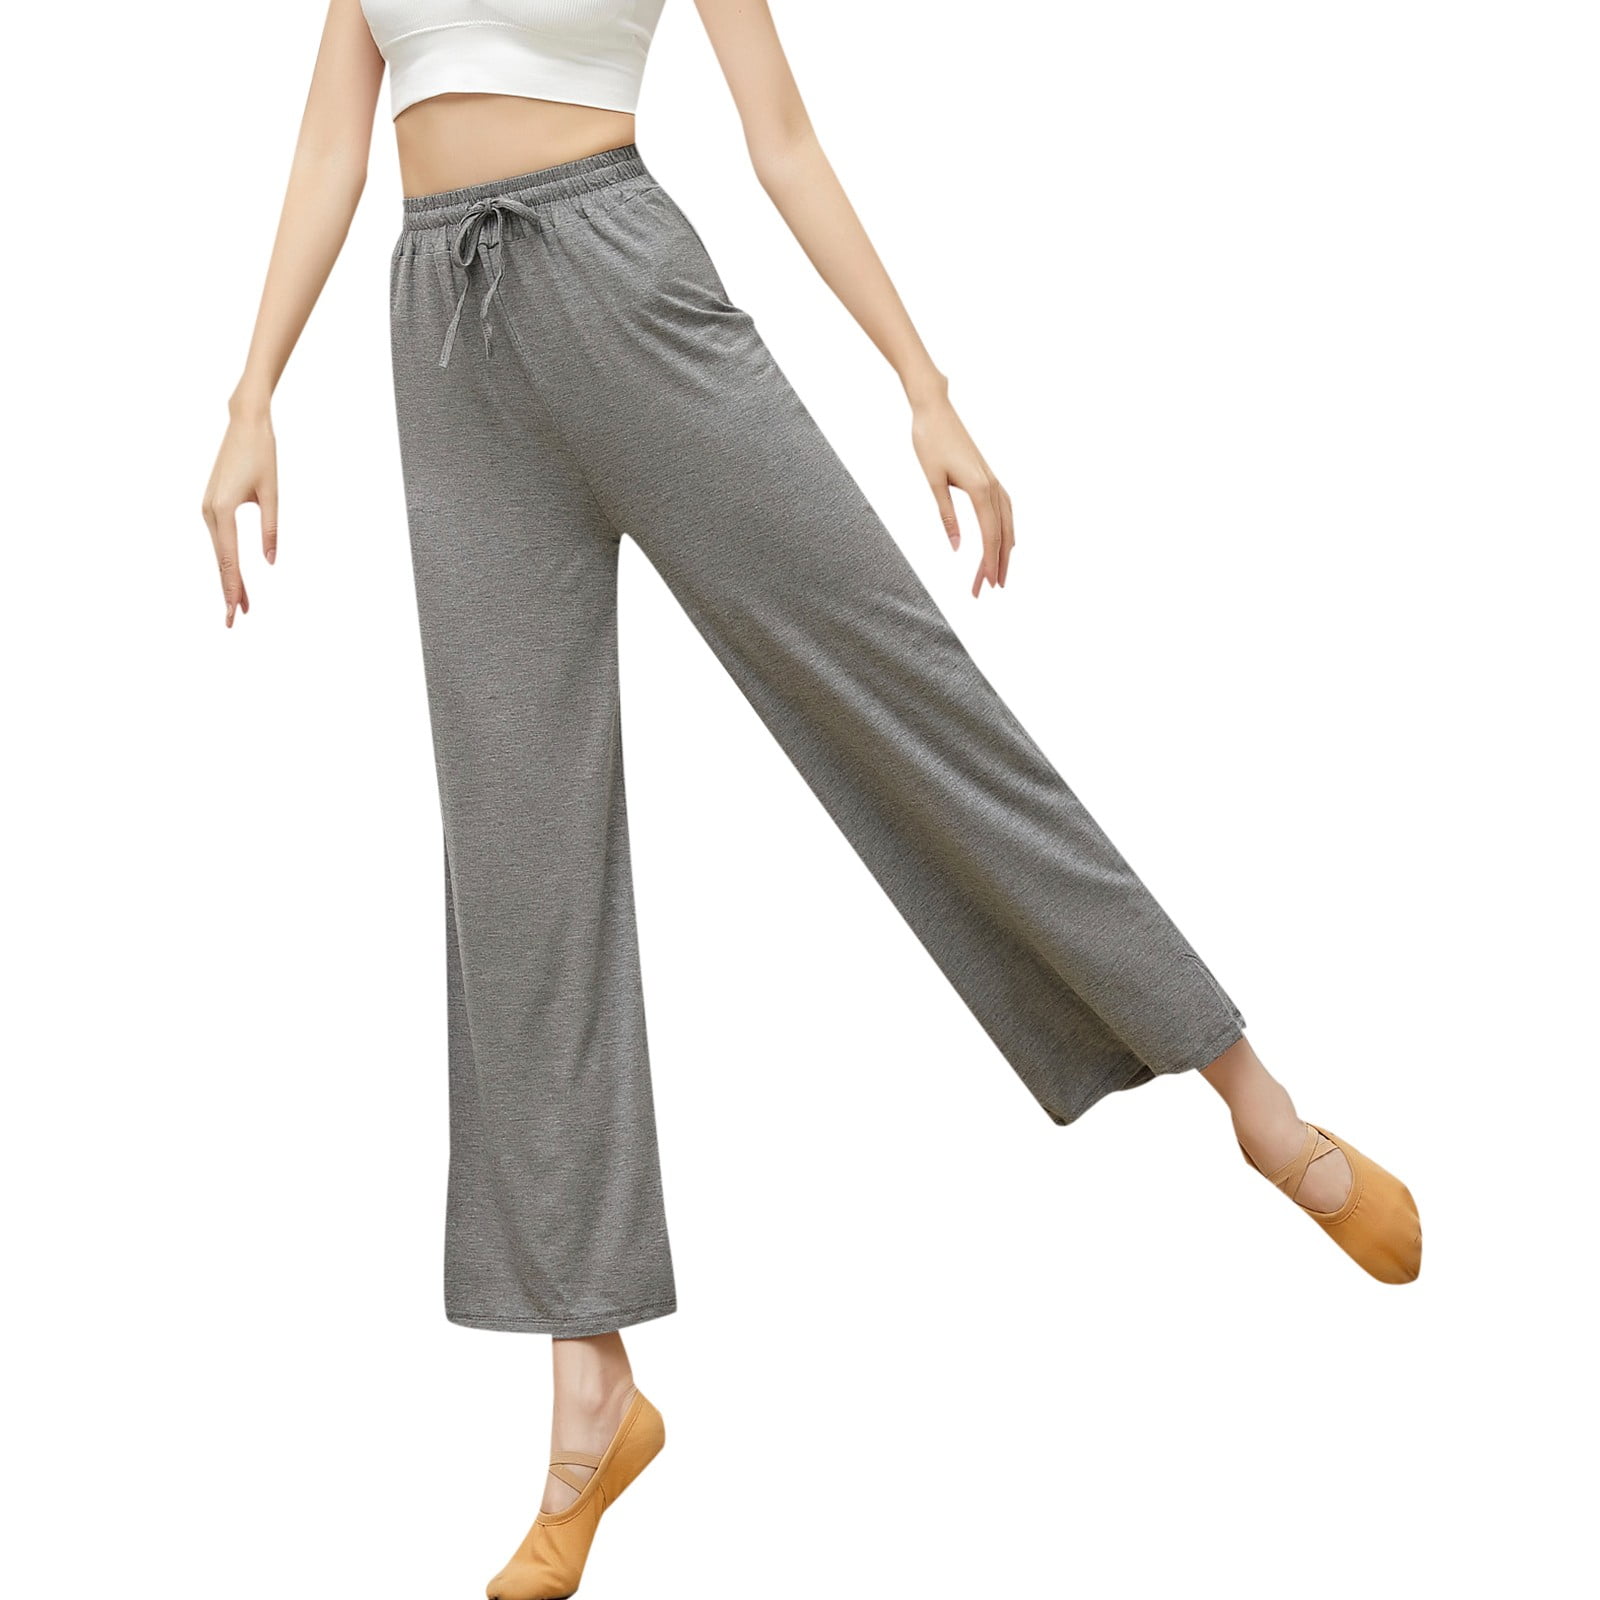 adviicd Petite Yoga Pants For Women Wide Leg Yoga Pants For